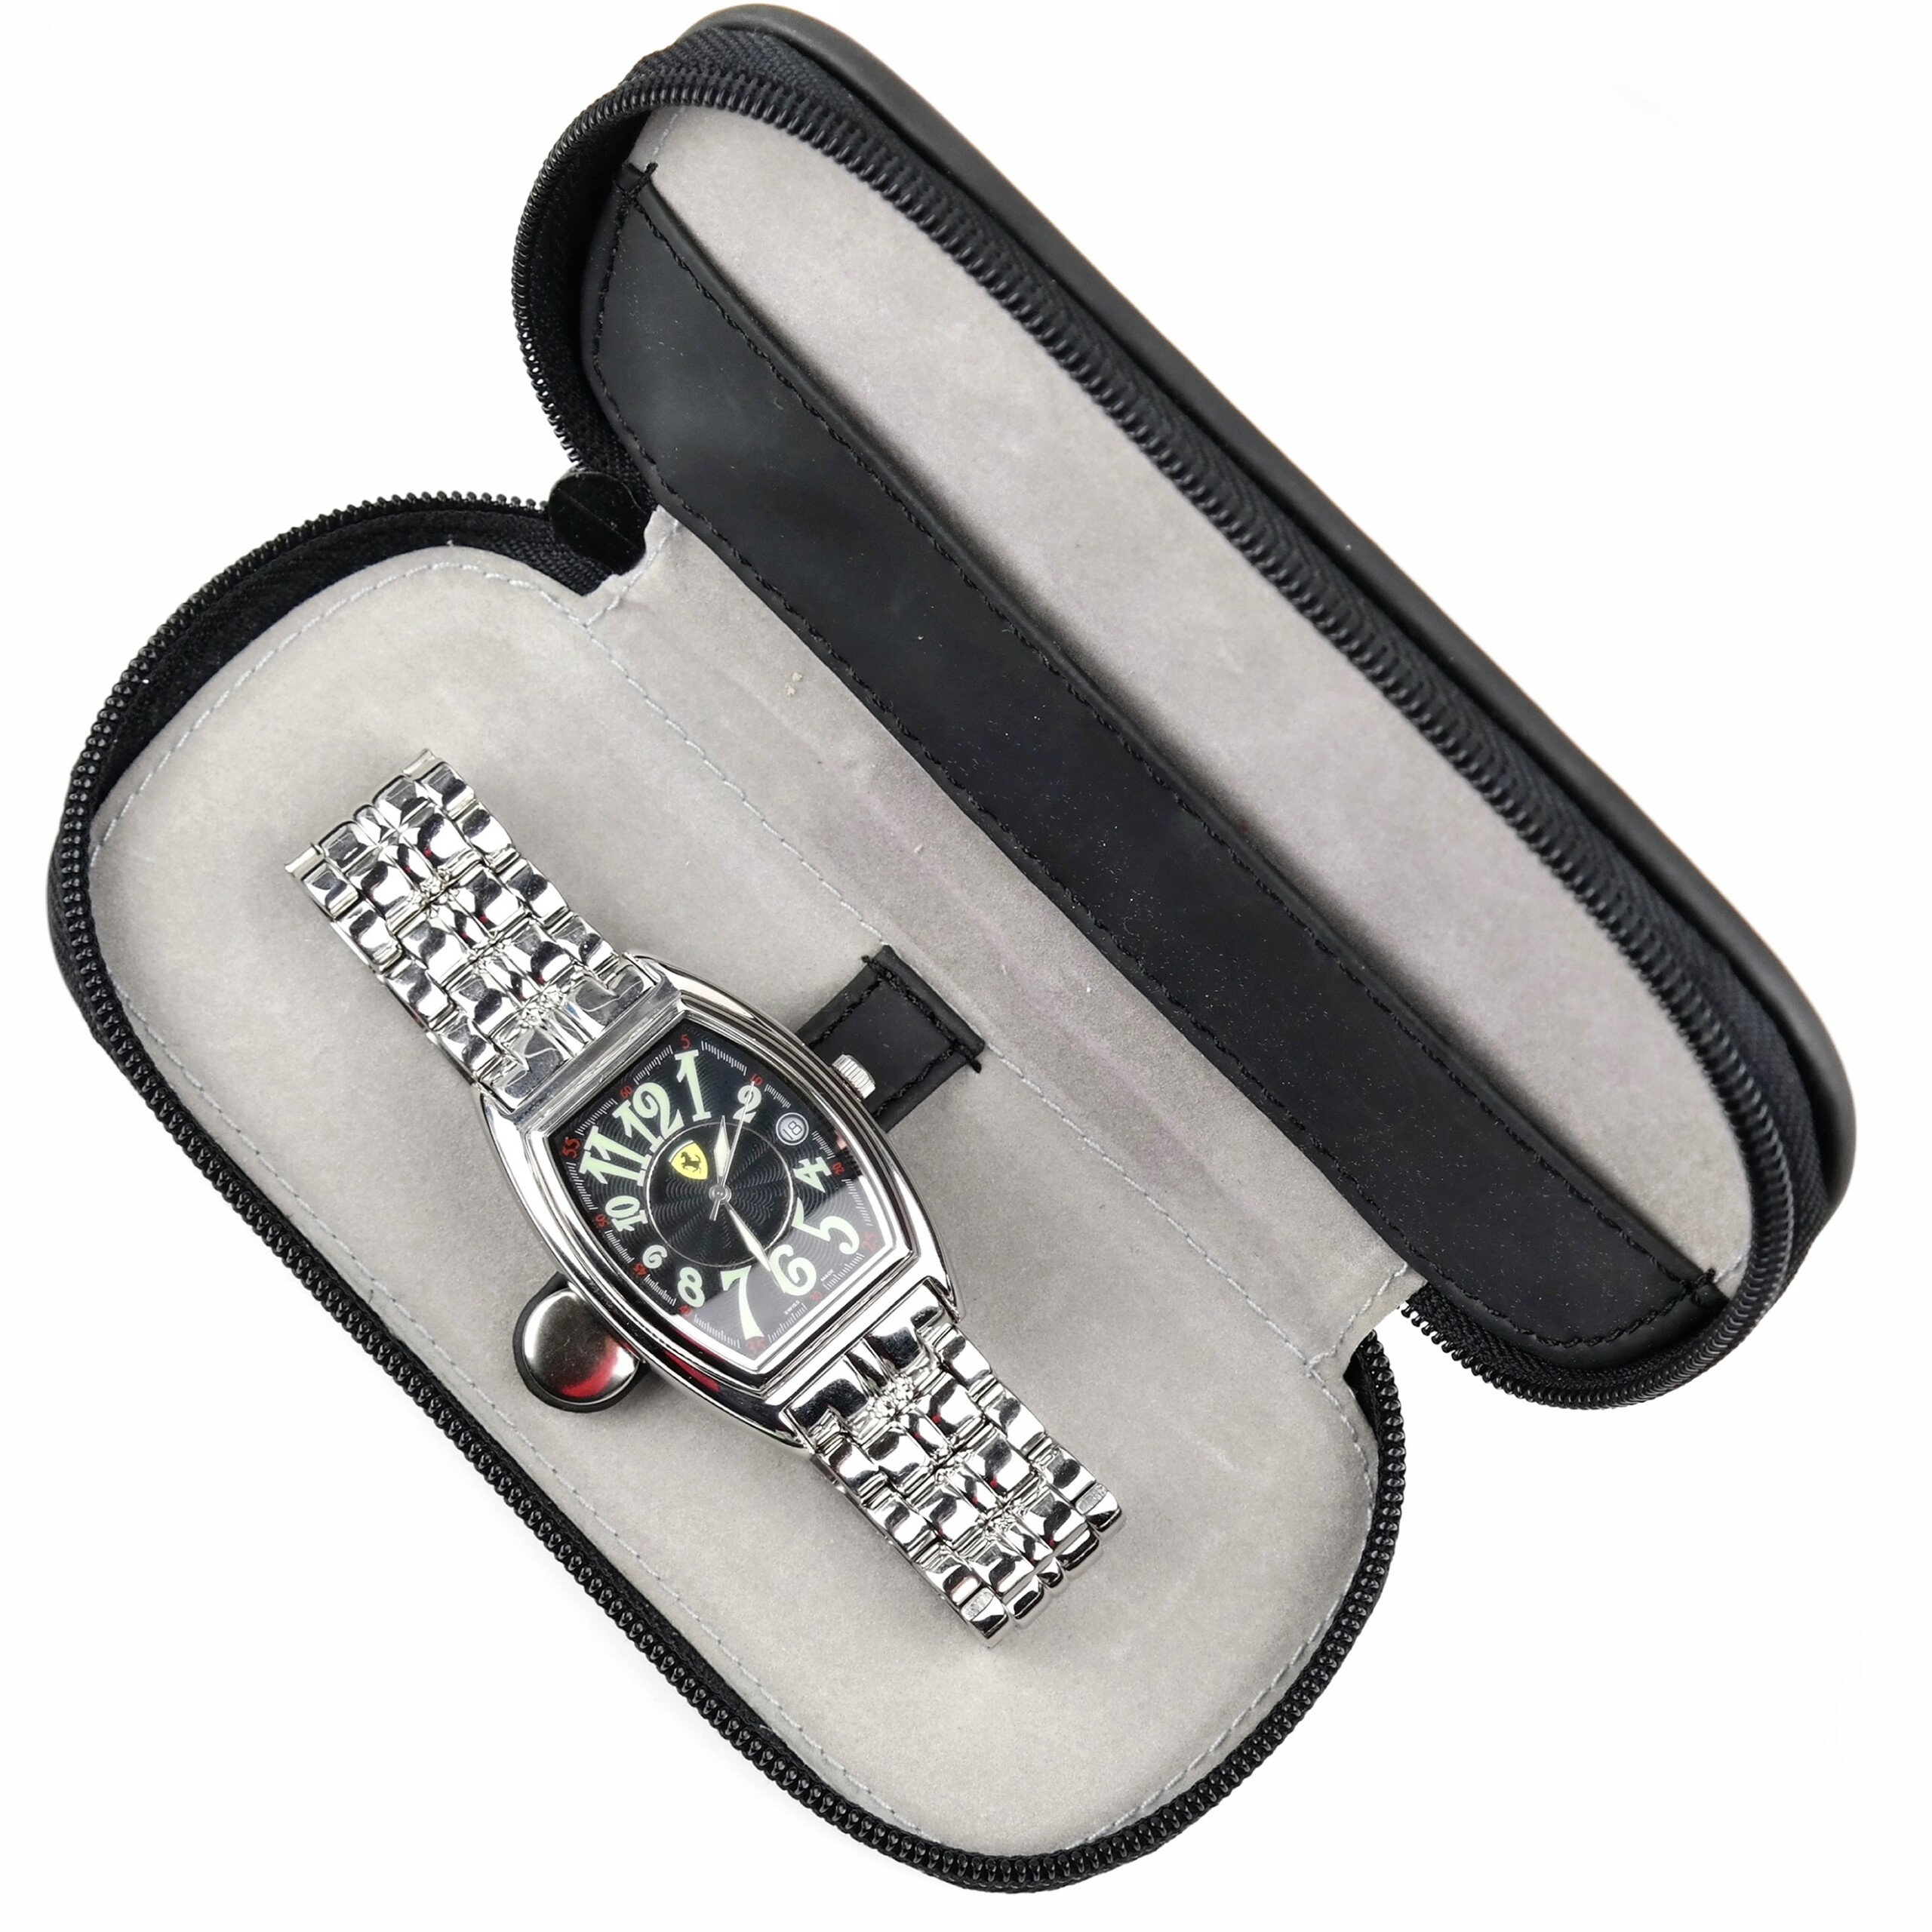 FERRARI Fan Club - CASABLANCA Homage - Swiss Made Automatic Watch - Black Dial